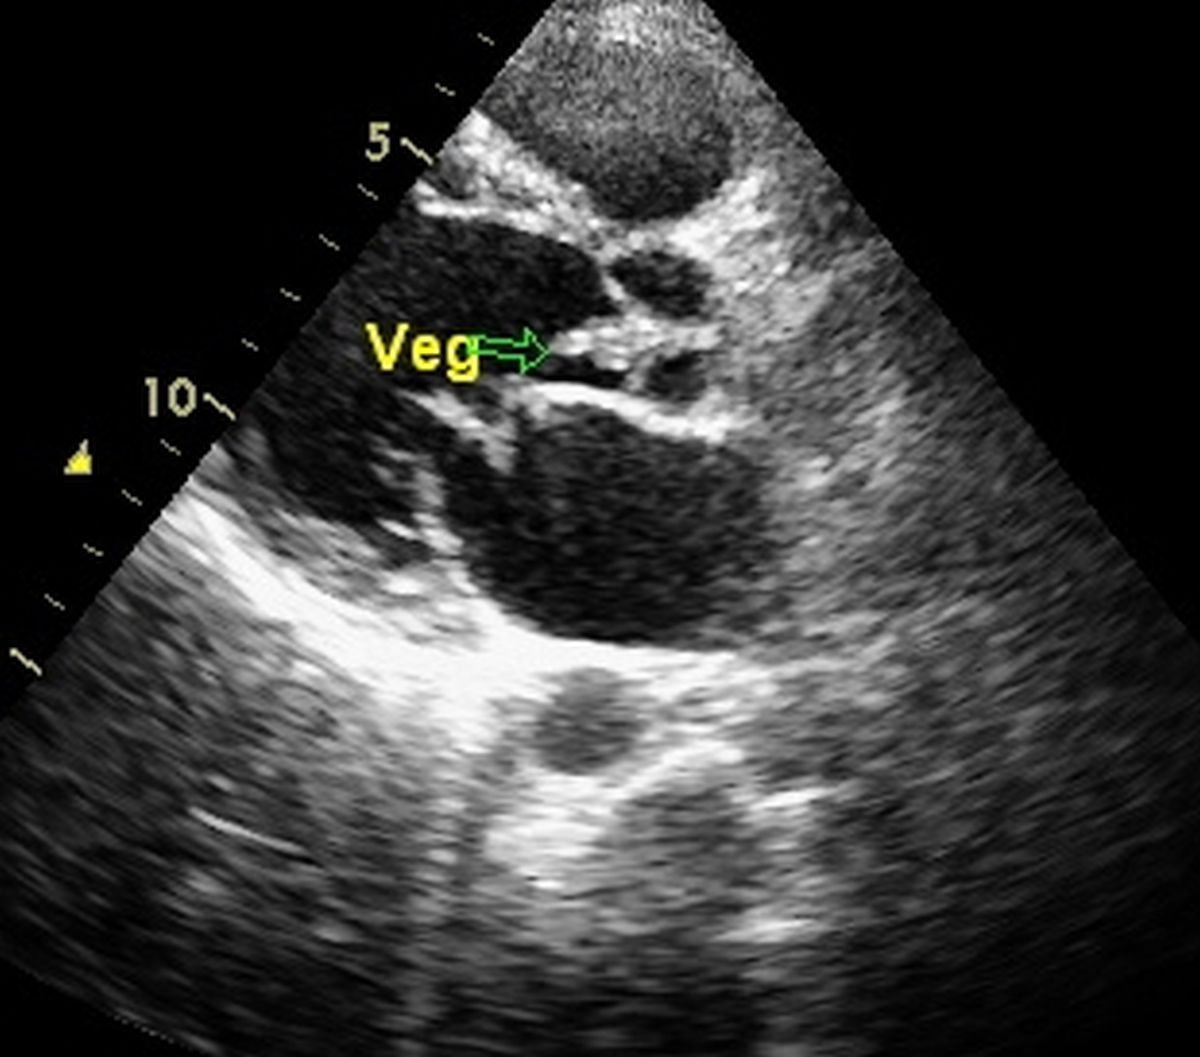 Vegeation on aortic valve